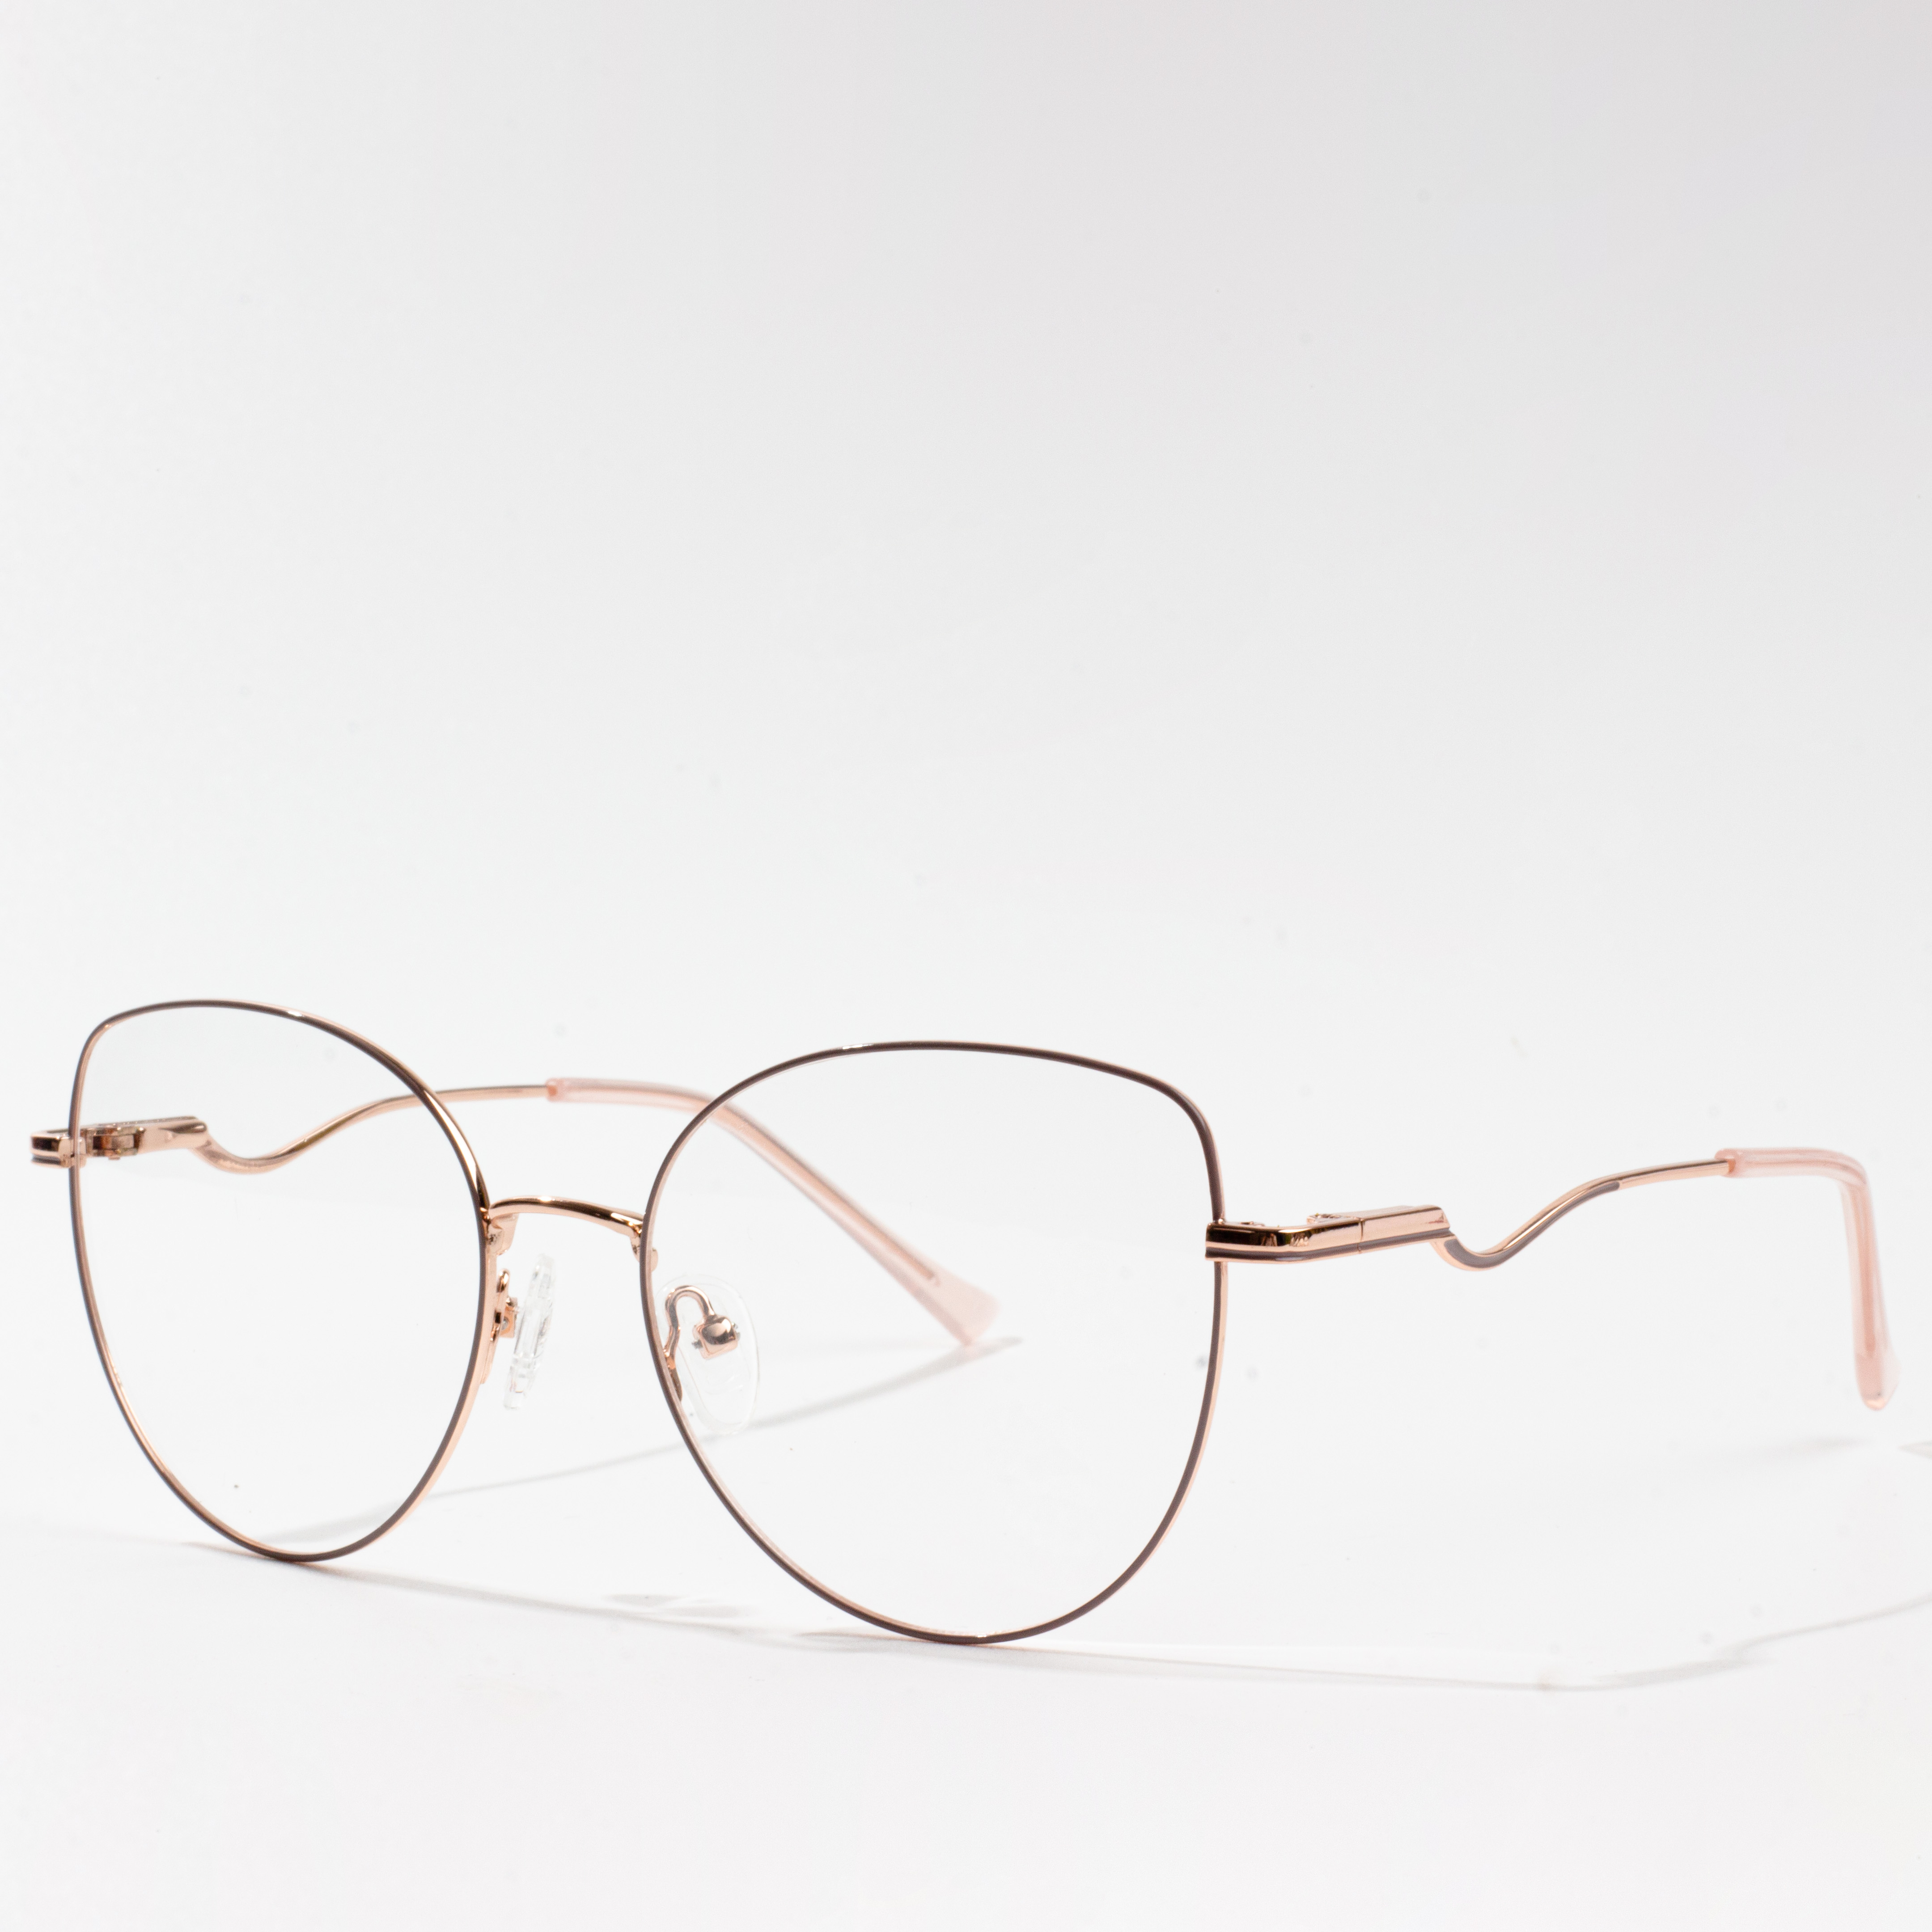 saka eyeglass frames